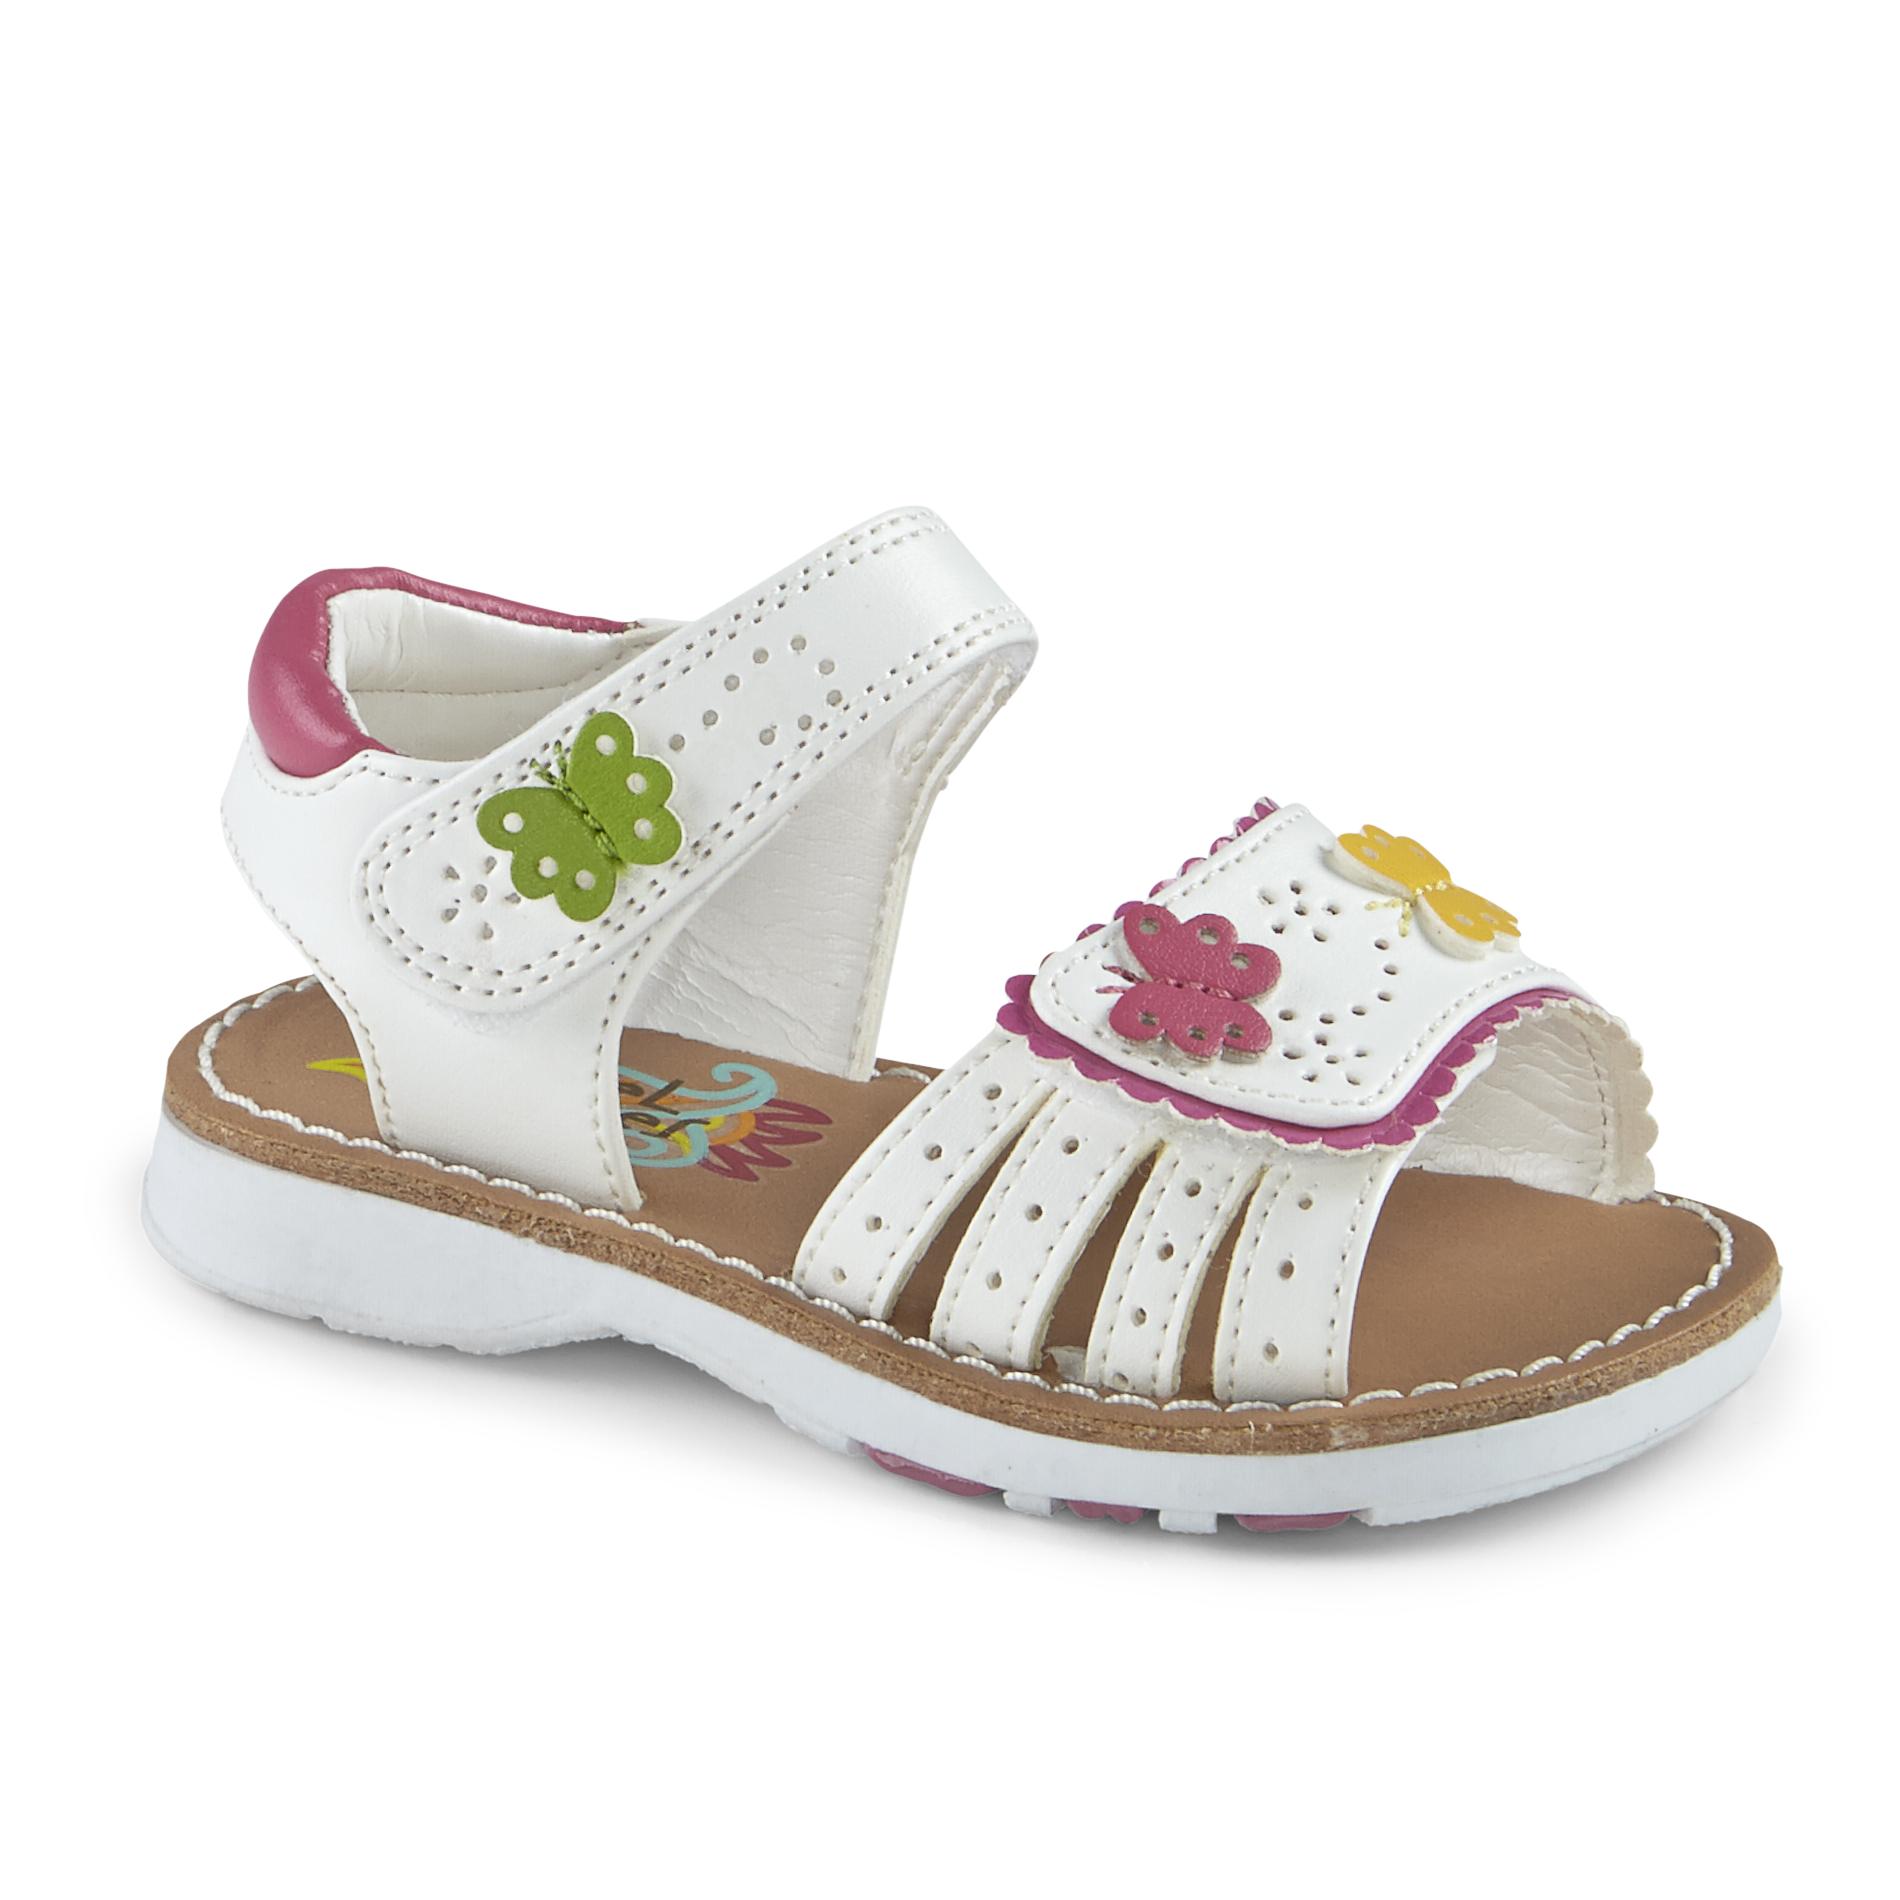 Rachel Shoes Toddler Girl's Carina White/Pink/Tan Sandal